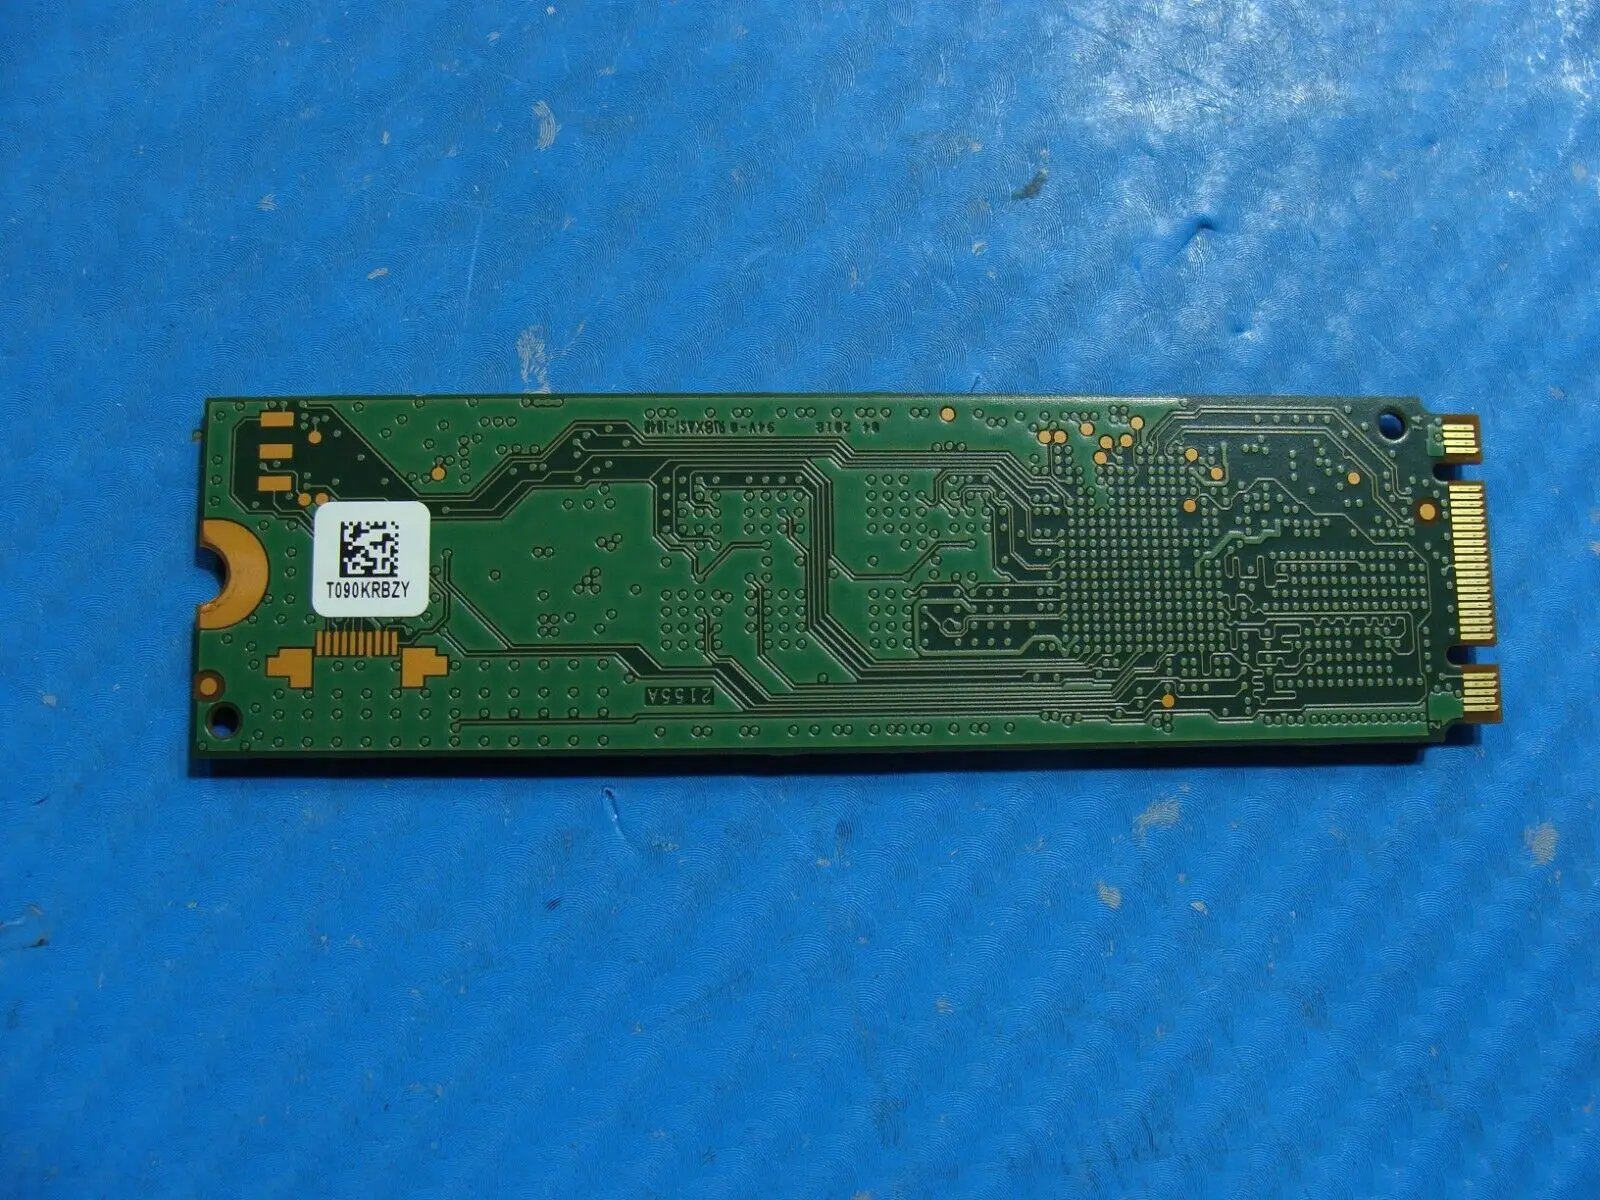 Asus S510UN-MS52 Micron 256GB M.2 SATA Solid State Drive MTFDDAV256TBN-1AR1ZABYY